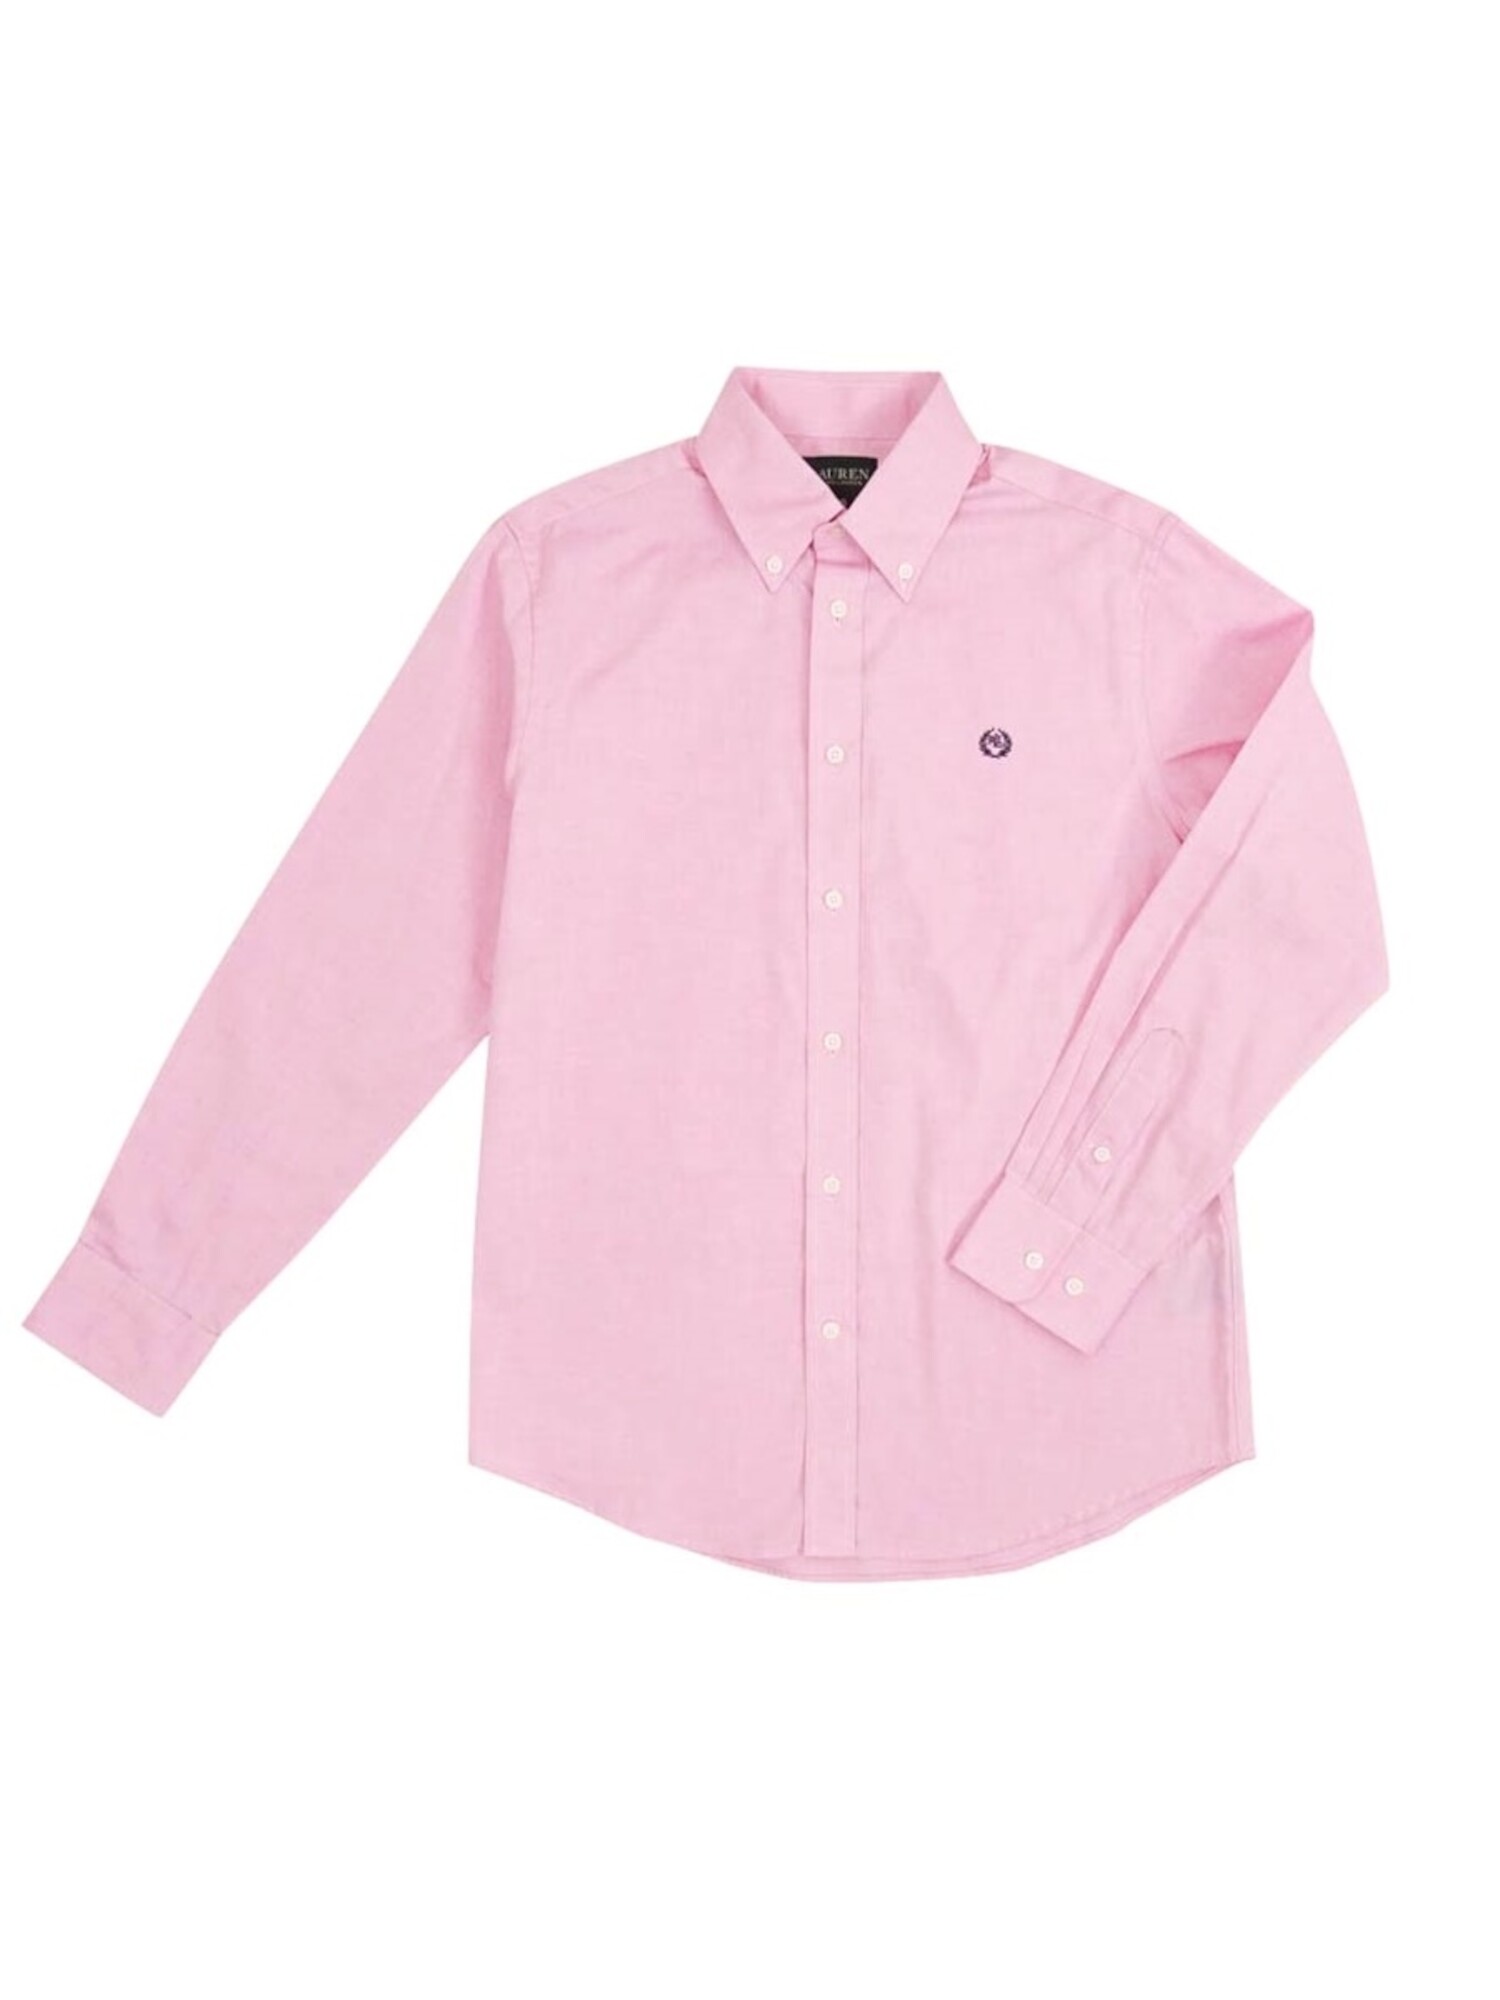 RALPH LAUREN Mens Pink Collared Dress Shirt 16 - image 1 of 5